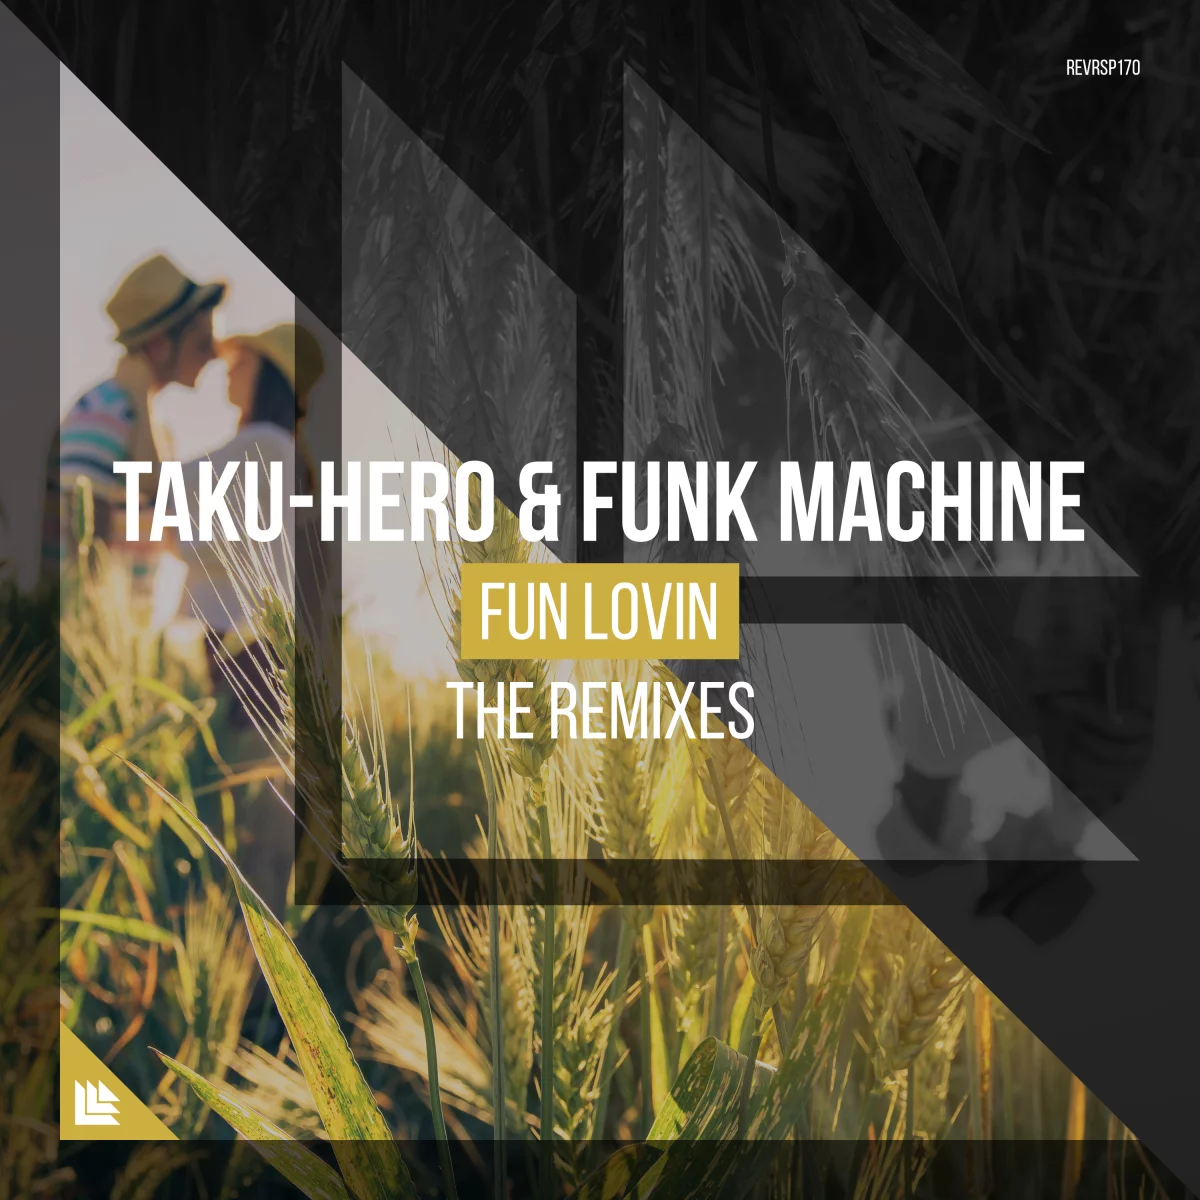 Fun Lovin (The Remixes) - Taku-Hero⁠ & Funk Machine⁠ 